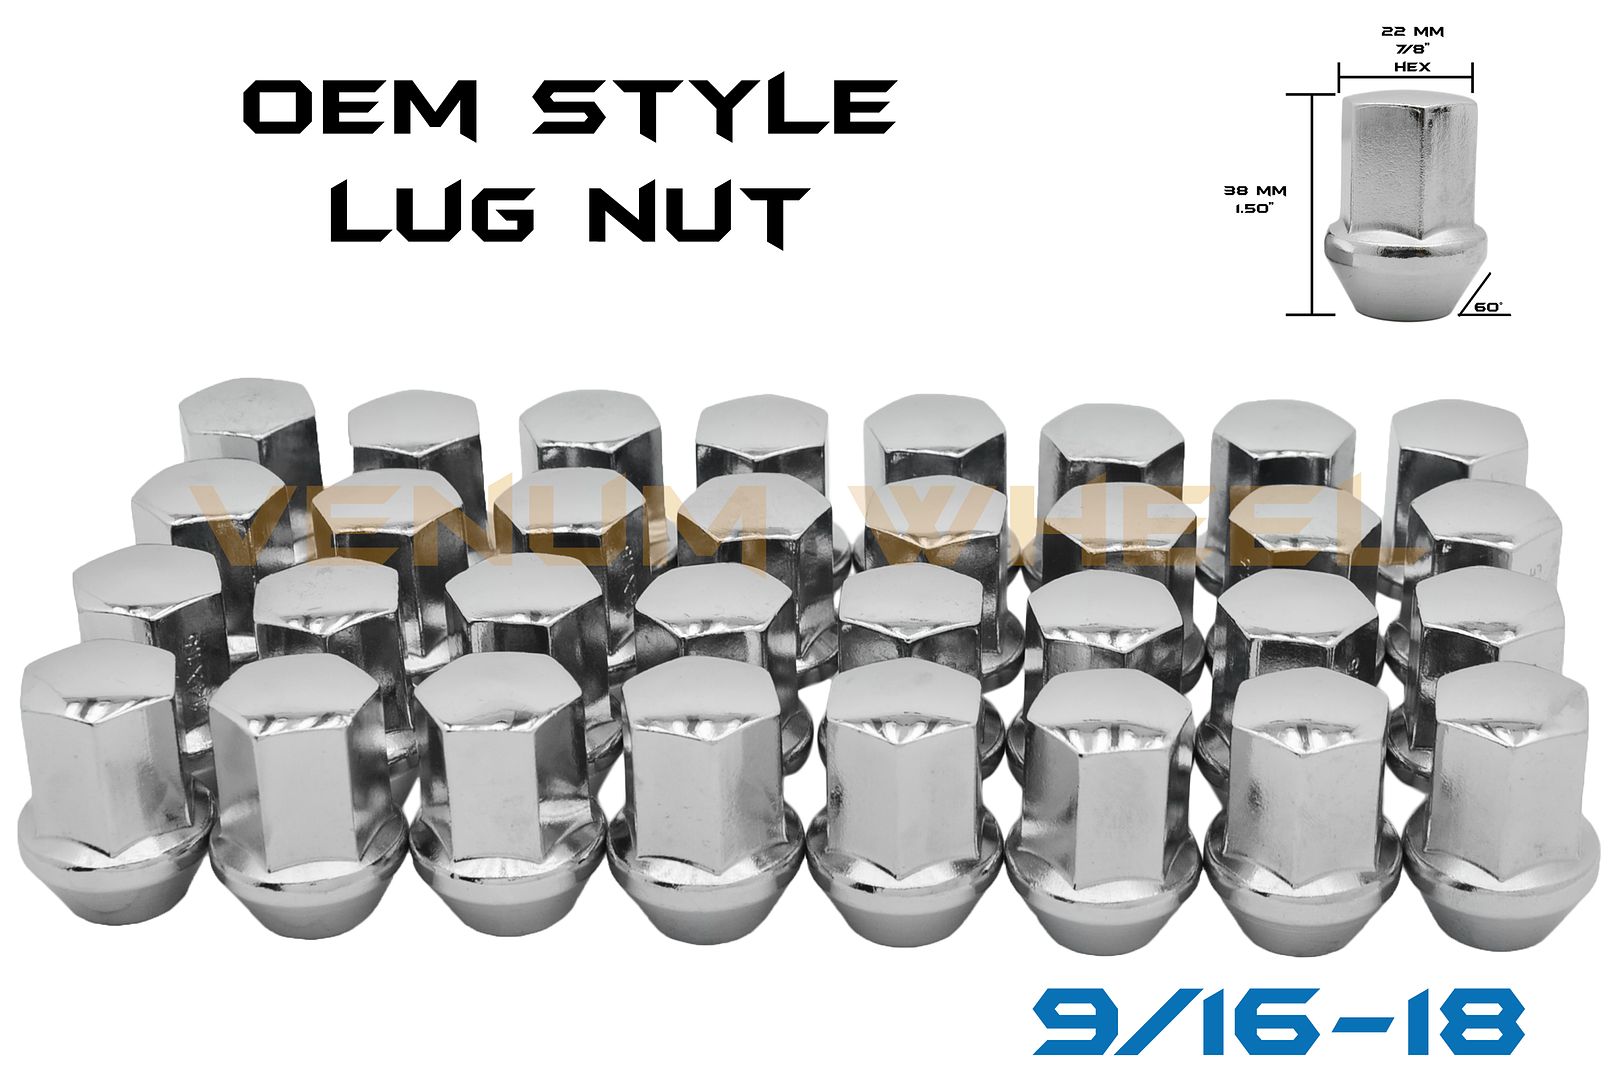 20PC CHROME DODGE RAM 1500 DAKOTA OEM/FACTORY STYLE LUG NUTS 9/16-18 | eBay Lug Nut Torque For Dodge Ram 1500